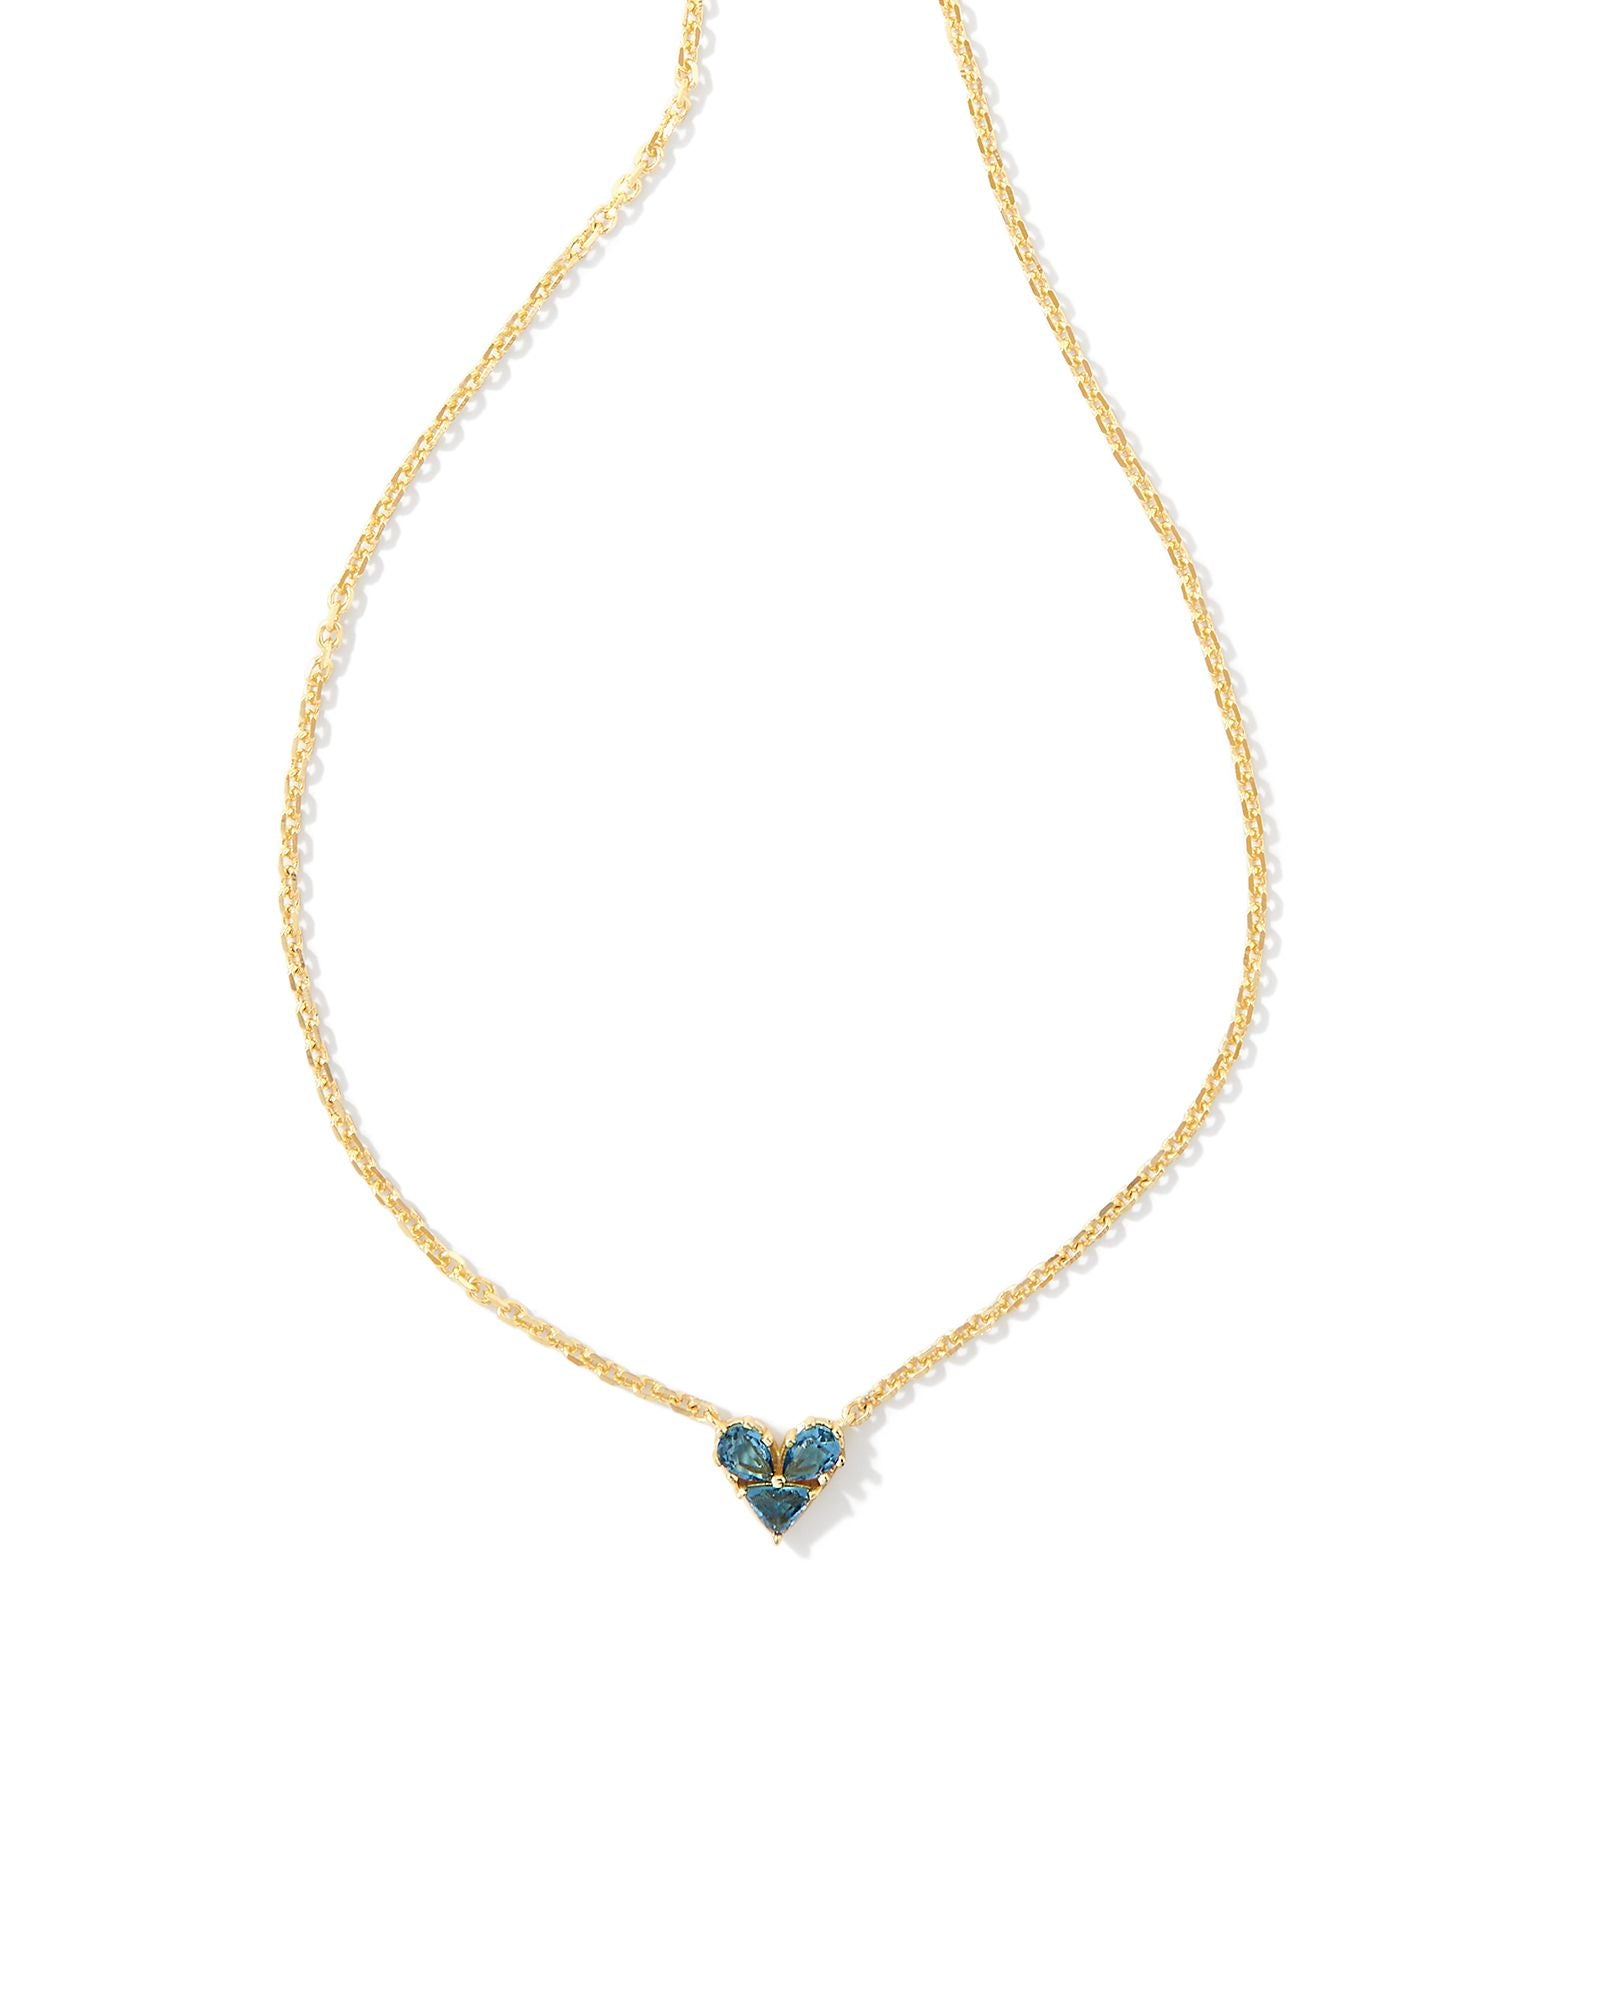 Katy Gold Heart Short Pendant Necklace Teal Crystal